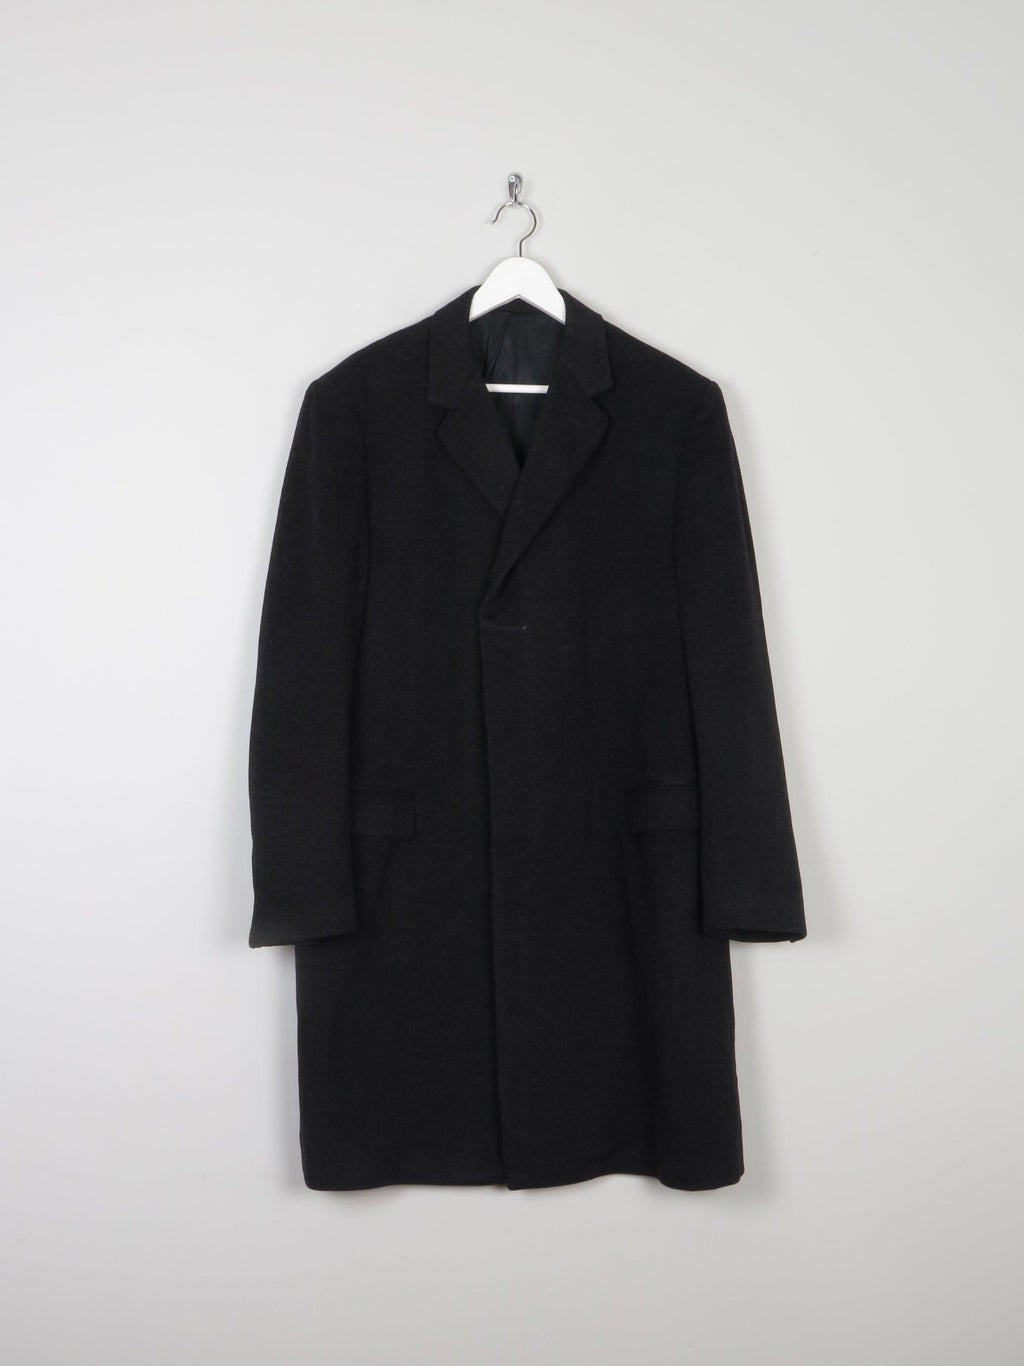 Men’s Fine Wool Dark Grey Cashmere Coat 46" L/XL - The Harlequin